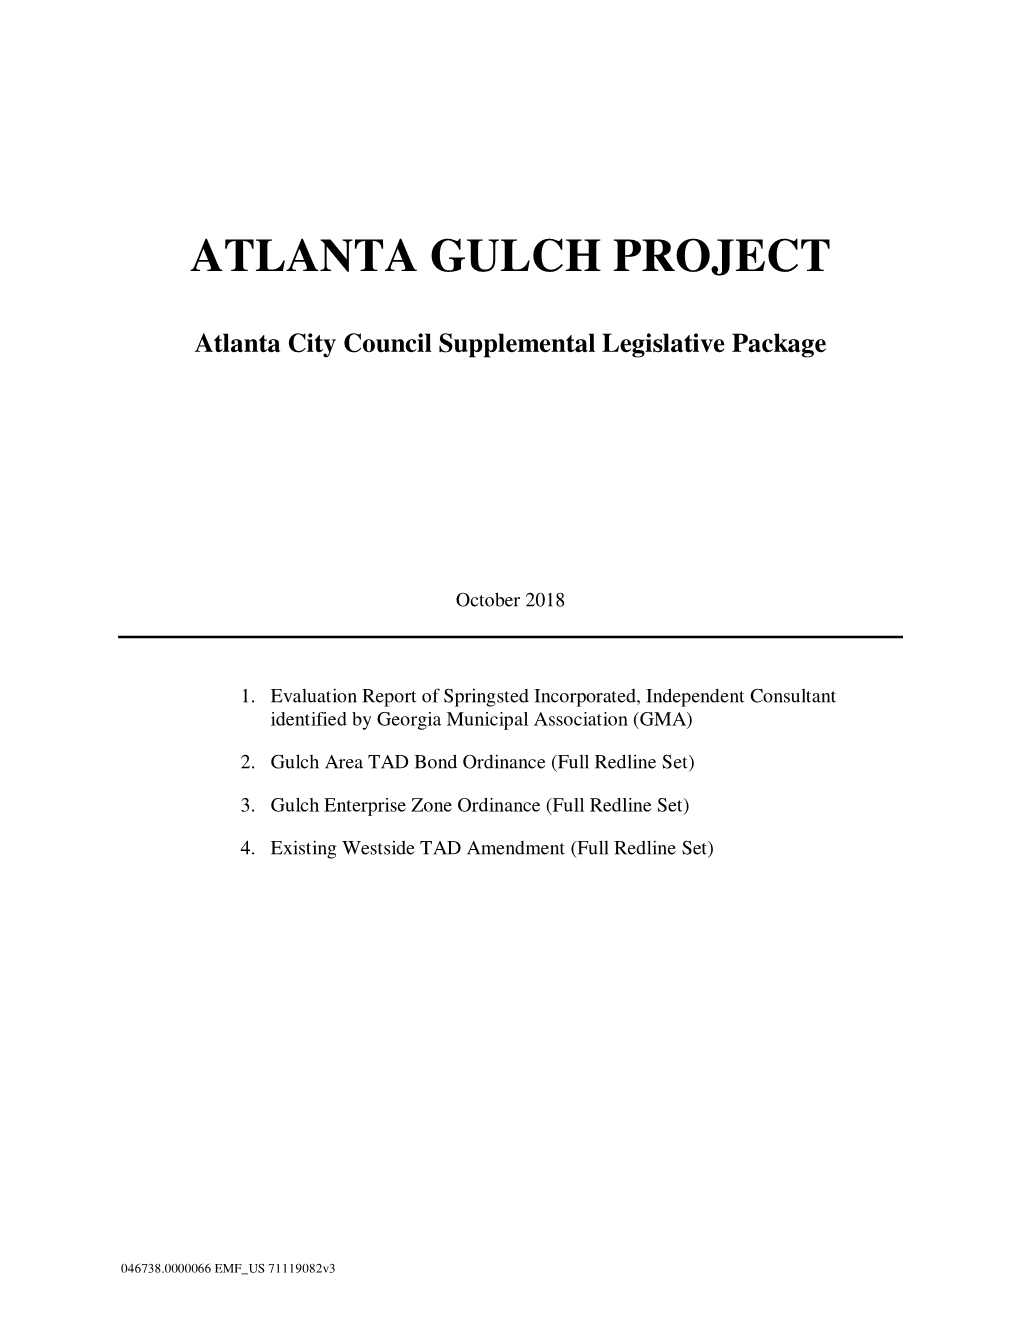 Atlanta Gulch Project